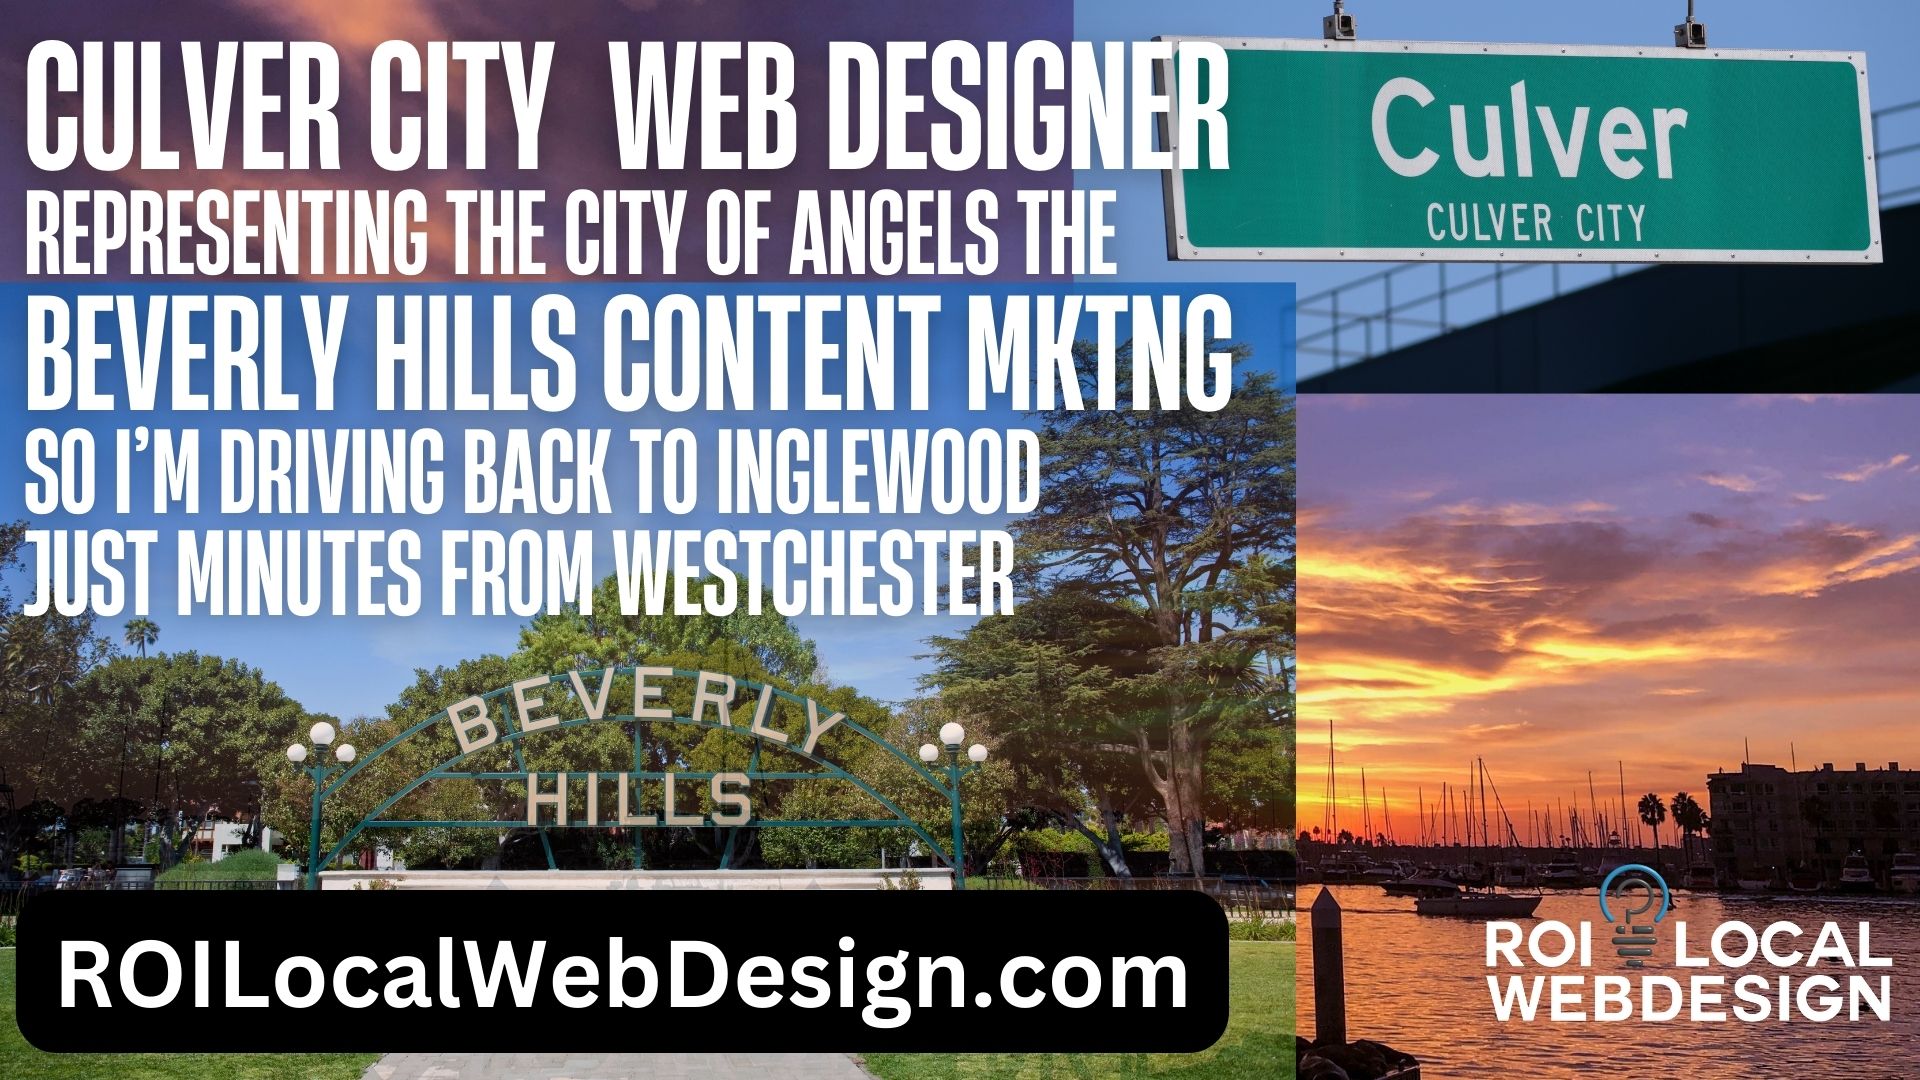 Website Design – ROI Local Webdesign Culver City CA